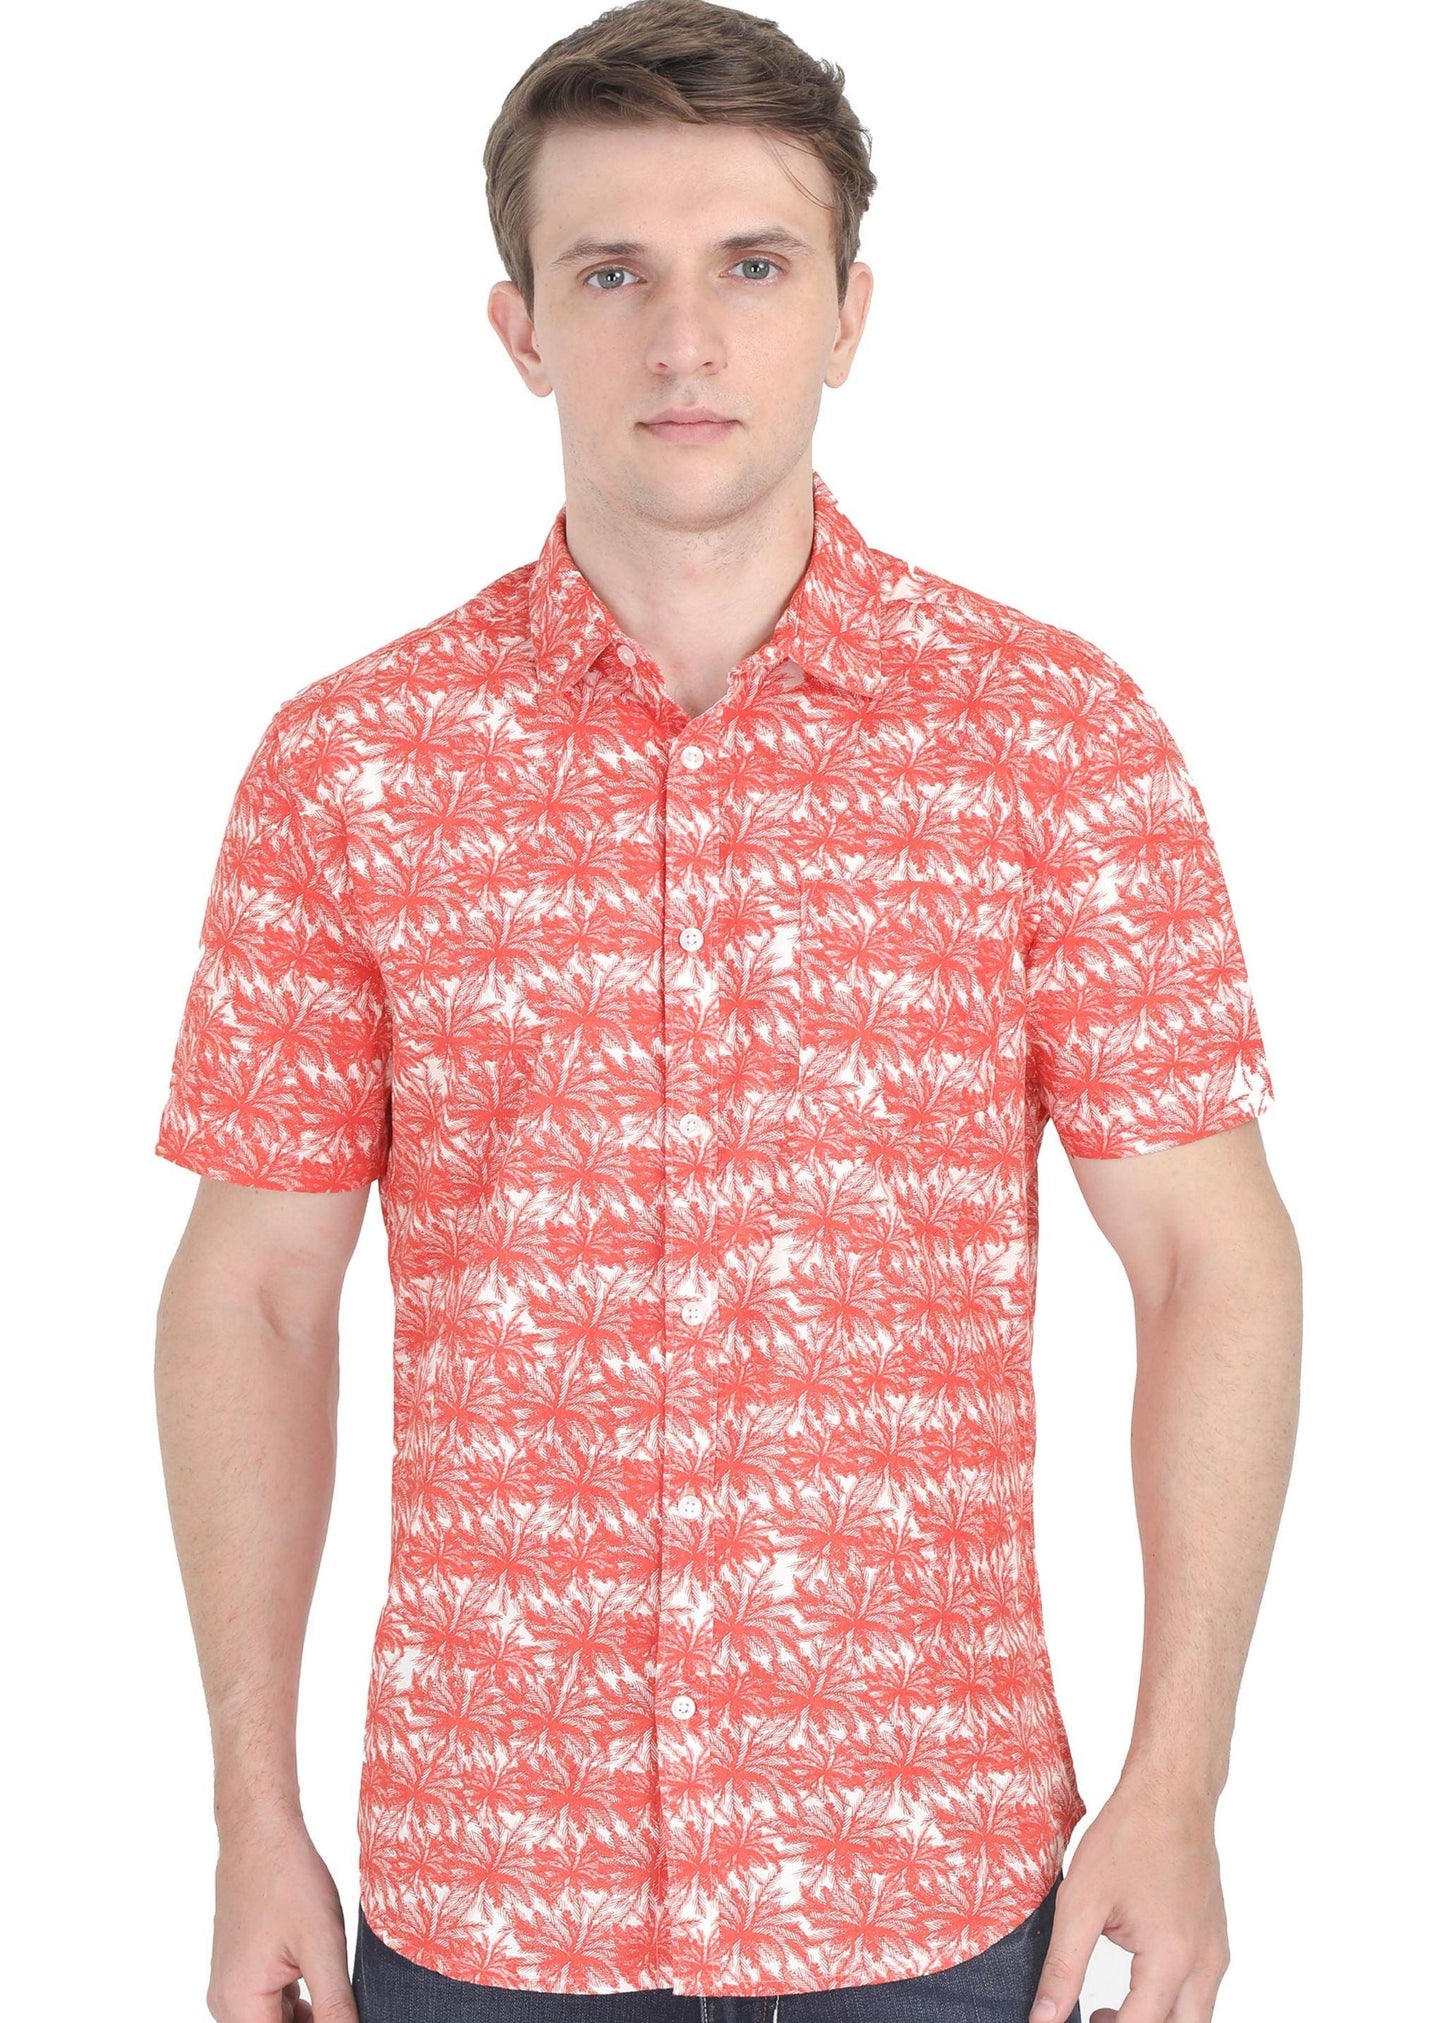 Tusok-orange-palmVacation-Printed Shirtimage-Orange Palm (1)